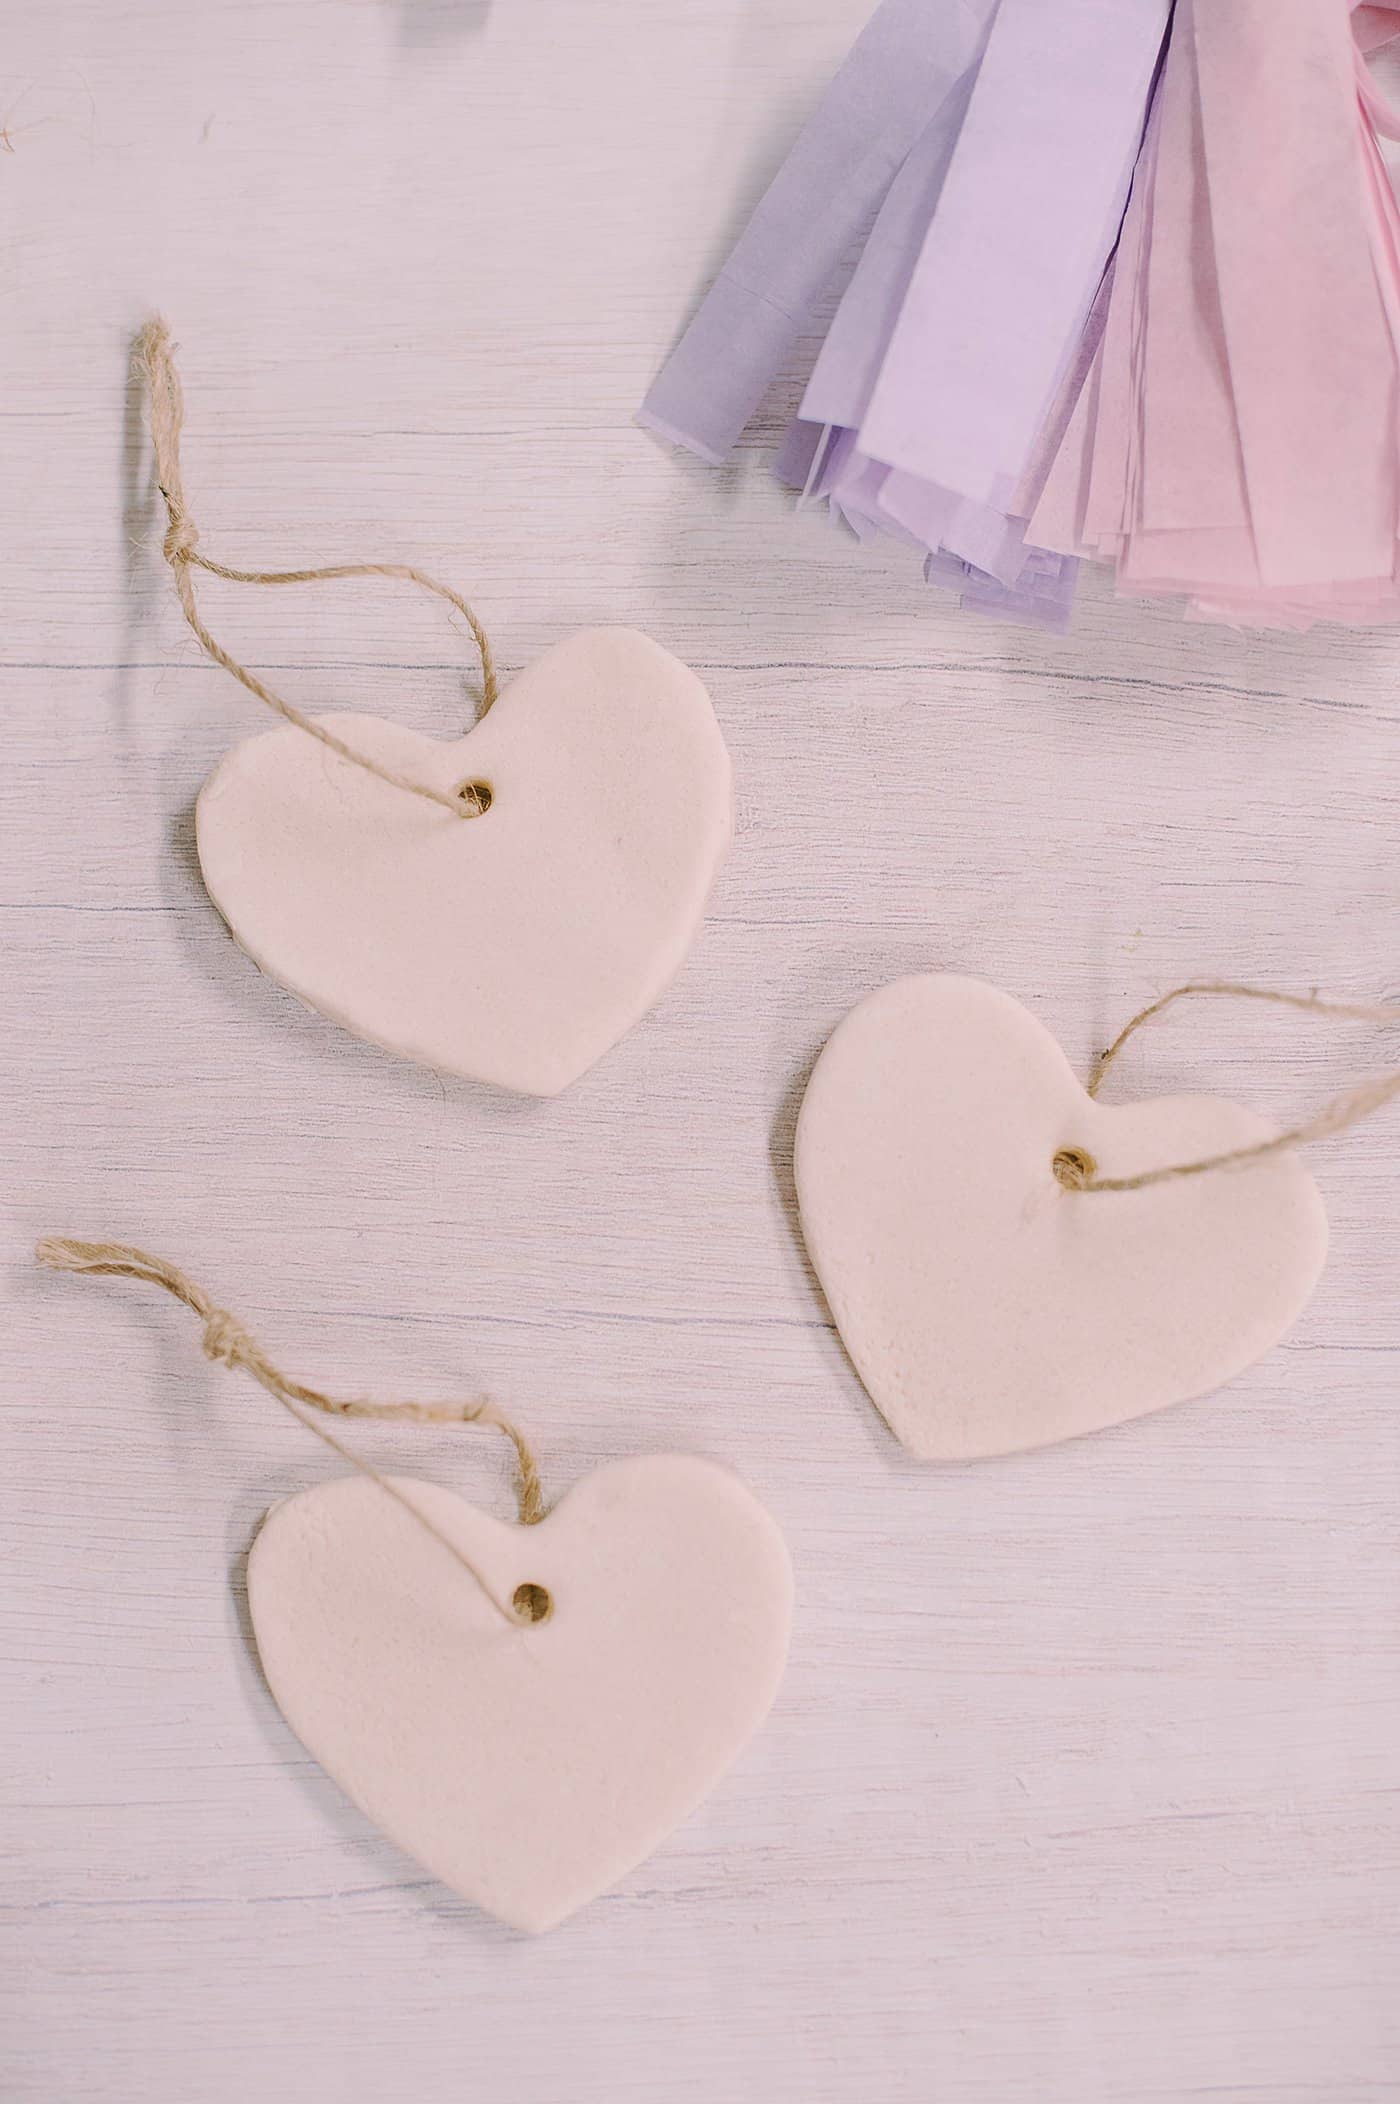 DIY salt dough heart shaped ornaments.